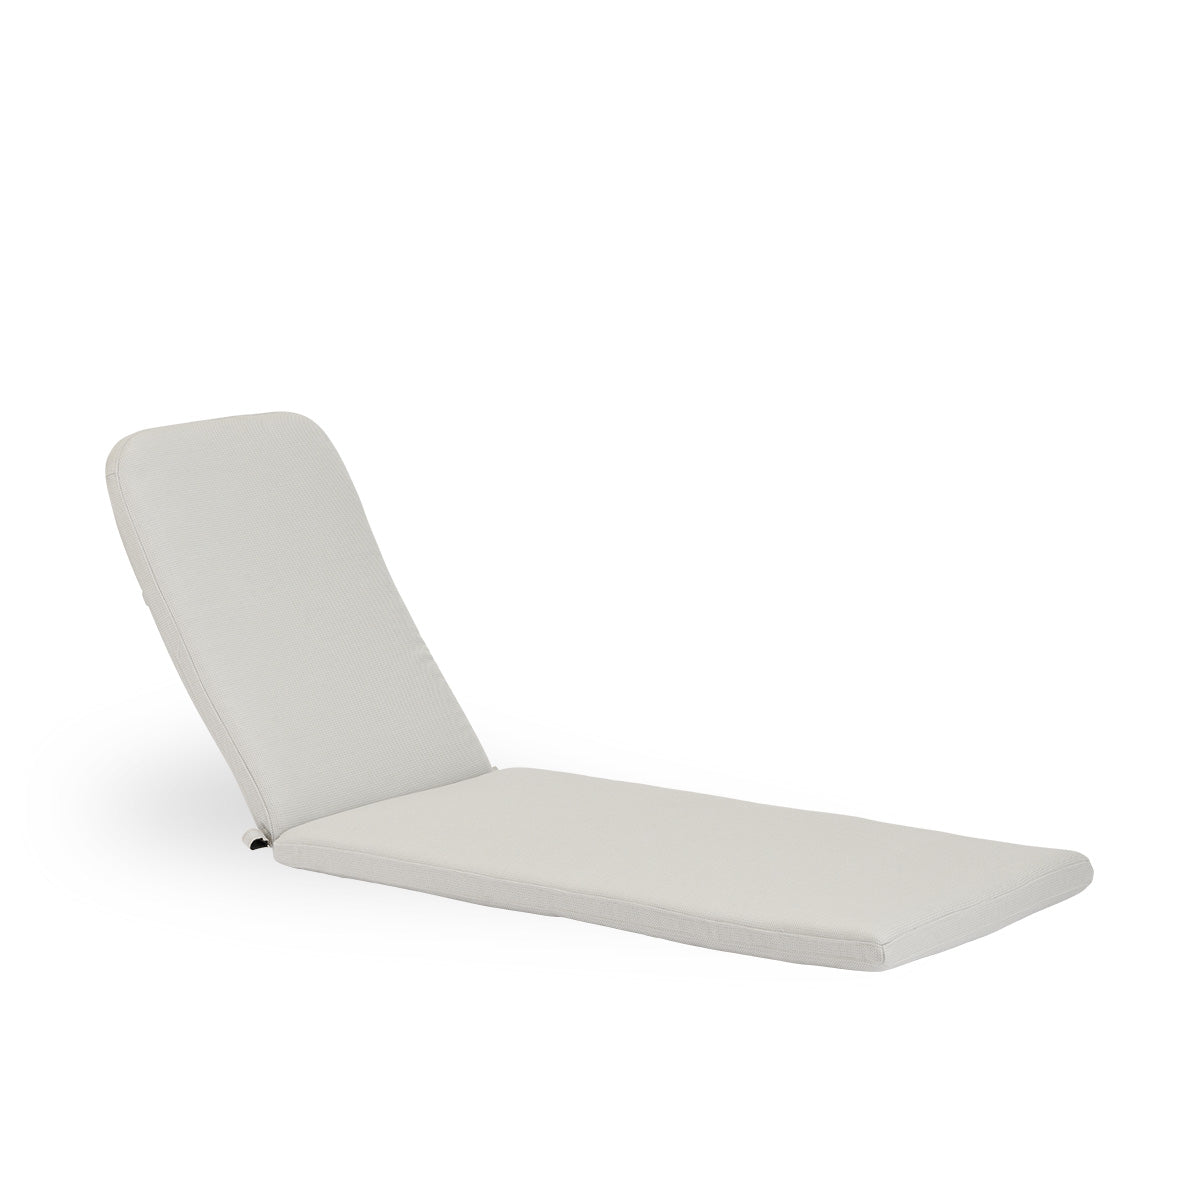 Seat & back cushion | Daisy Exterior Sunbed